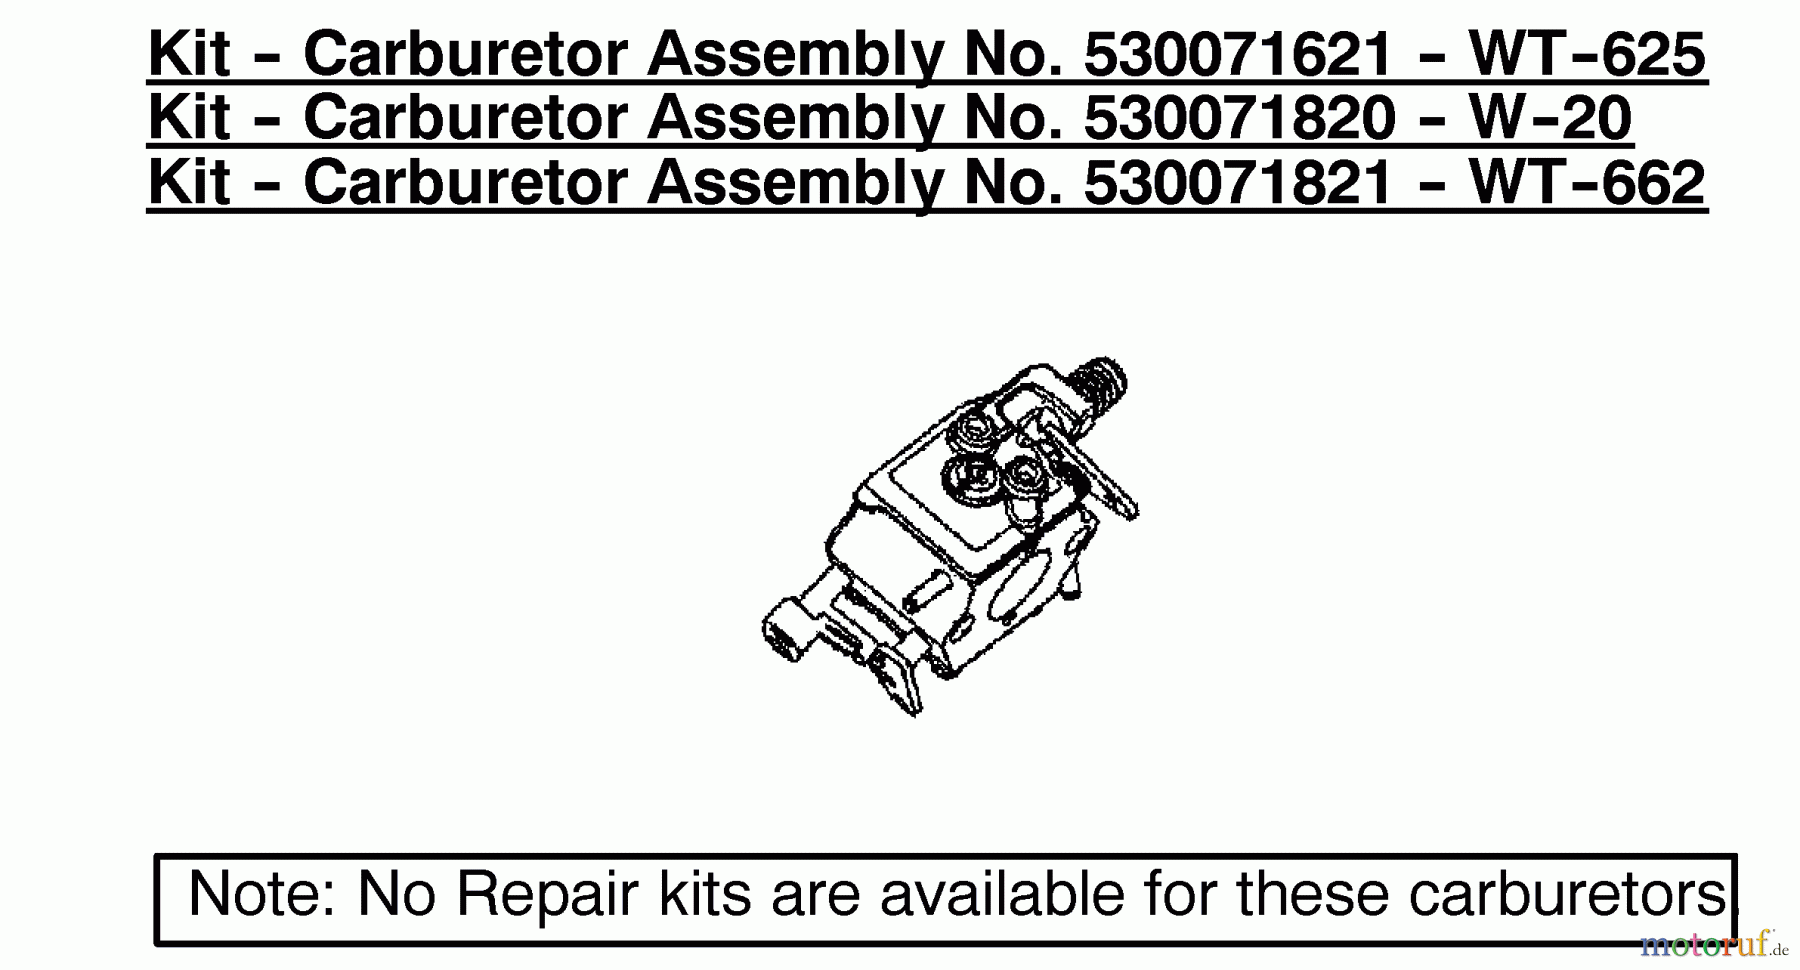  Poulan / Weed Eater Motorsägen 2250 (Type 5) - Poulan Woodmaster Chainsaw Kit - Carburetor Assembly 530071621/530071820/530071821